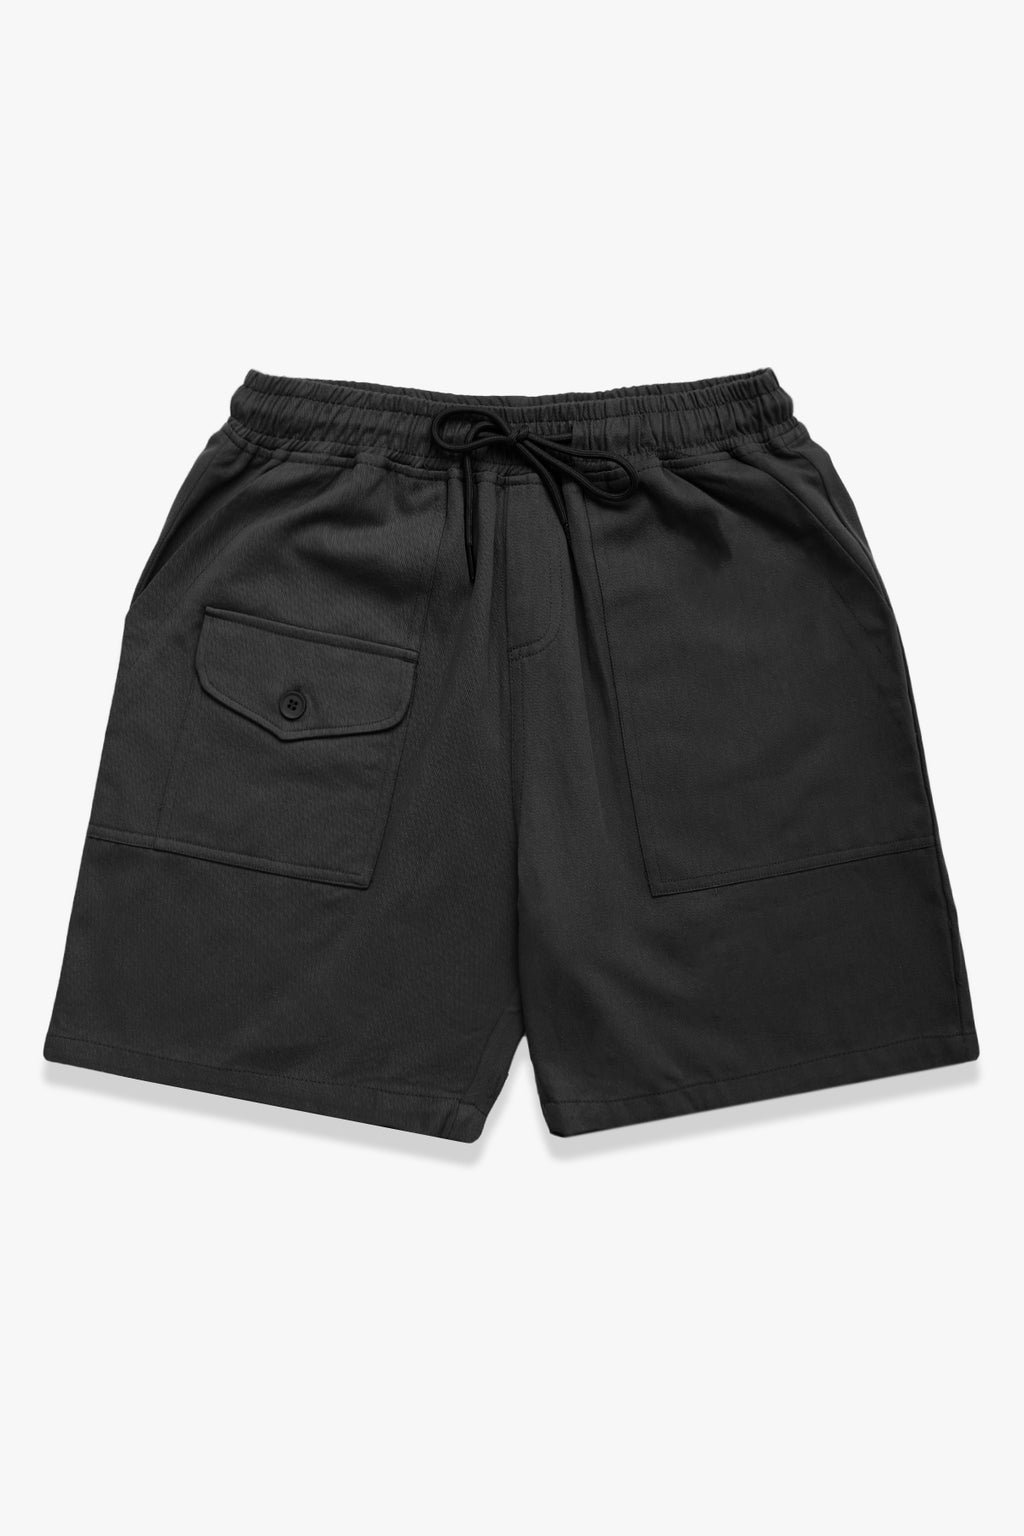 Blacksmith - Beach Cargo Shorts - Black